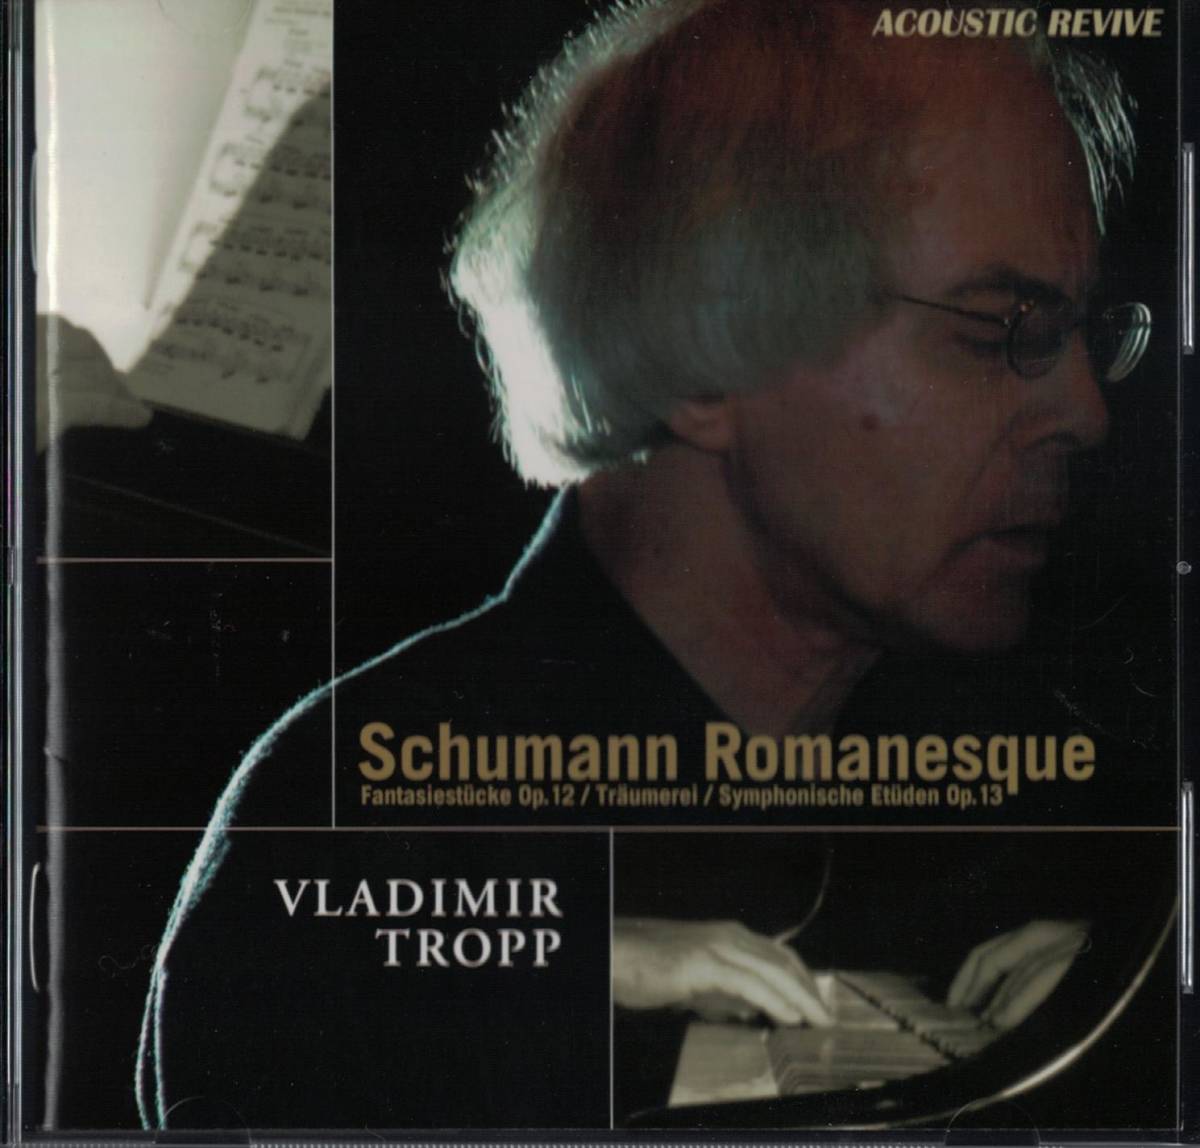 [Acoustic Revive SACD] Vladimir Tropp - Schumann Romanesque ウラディミール・トロップ アコースティック・リヴァイブ シューマン_画像1